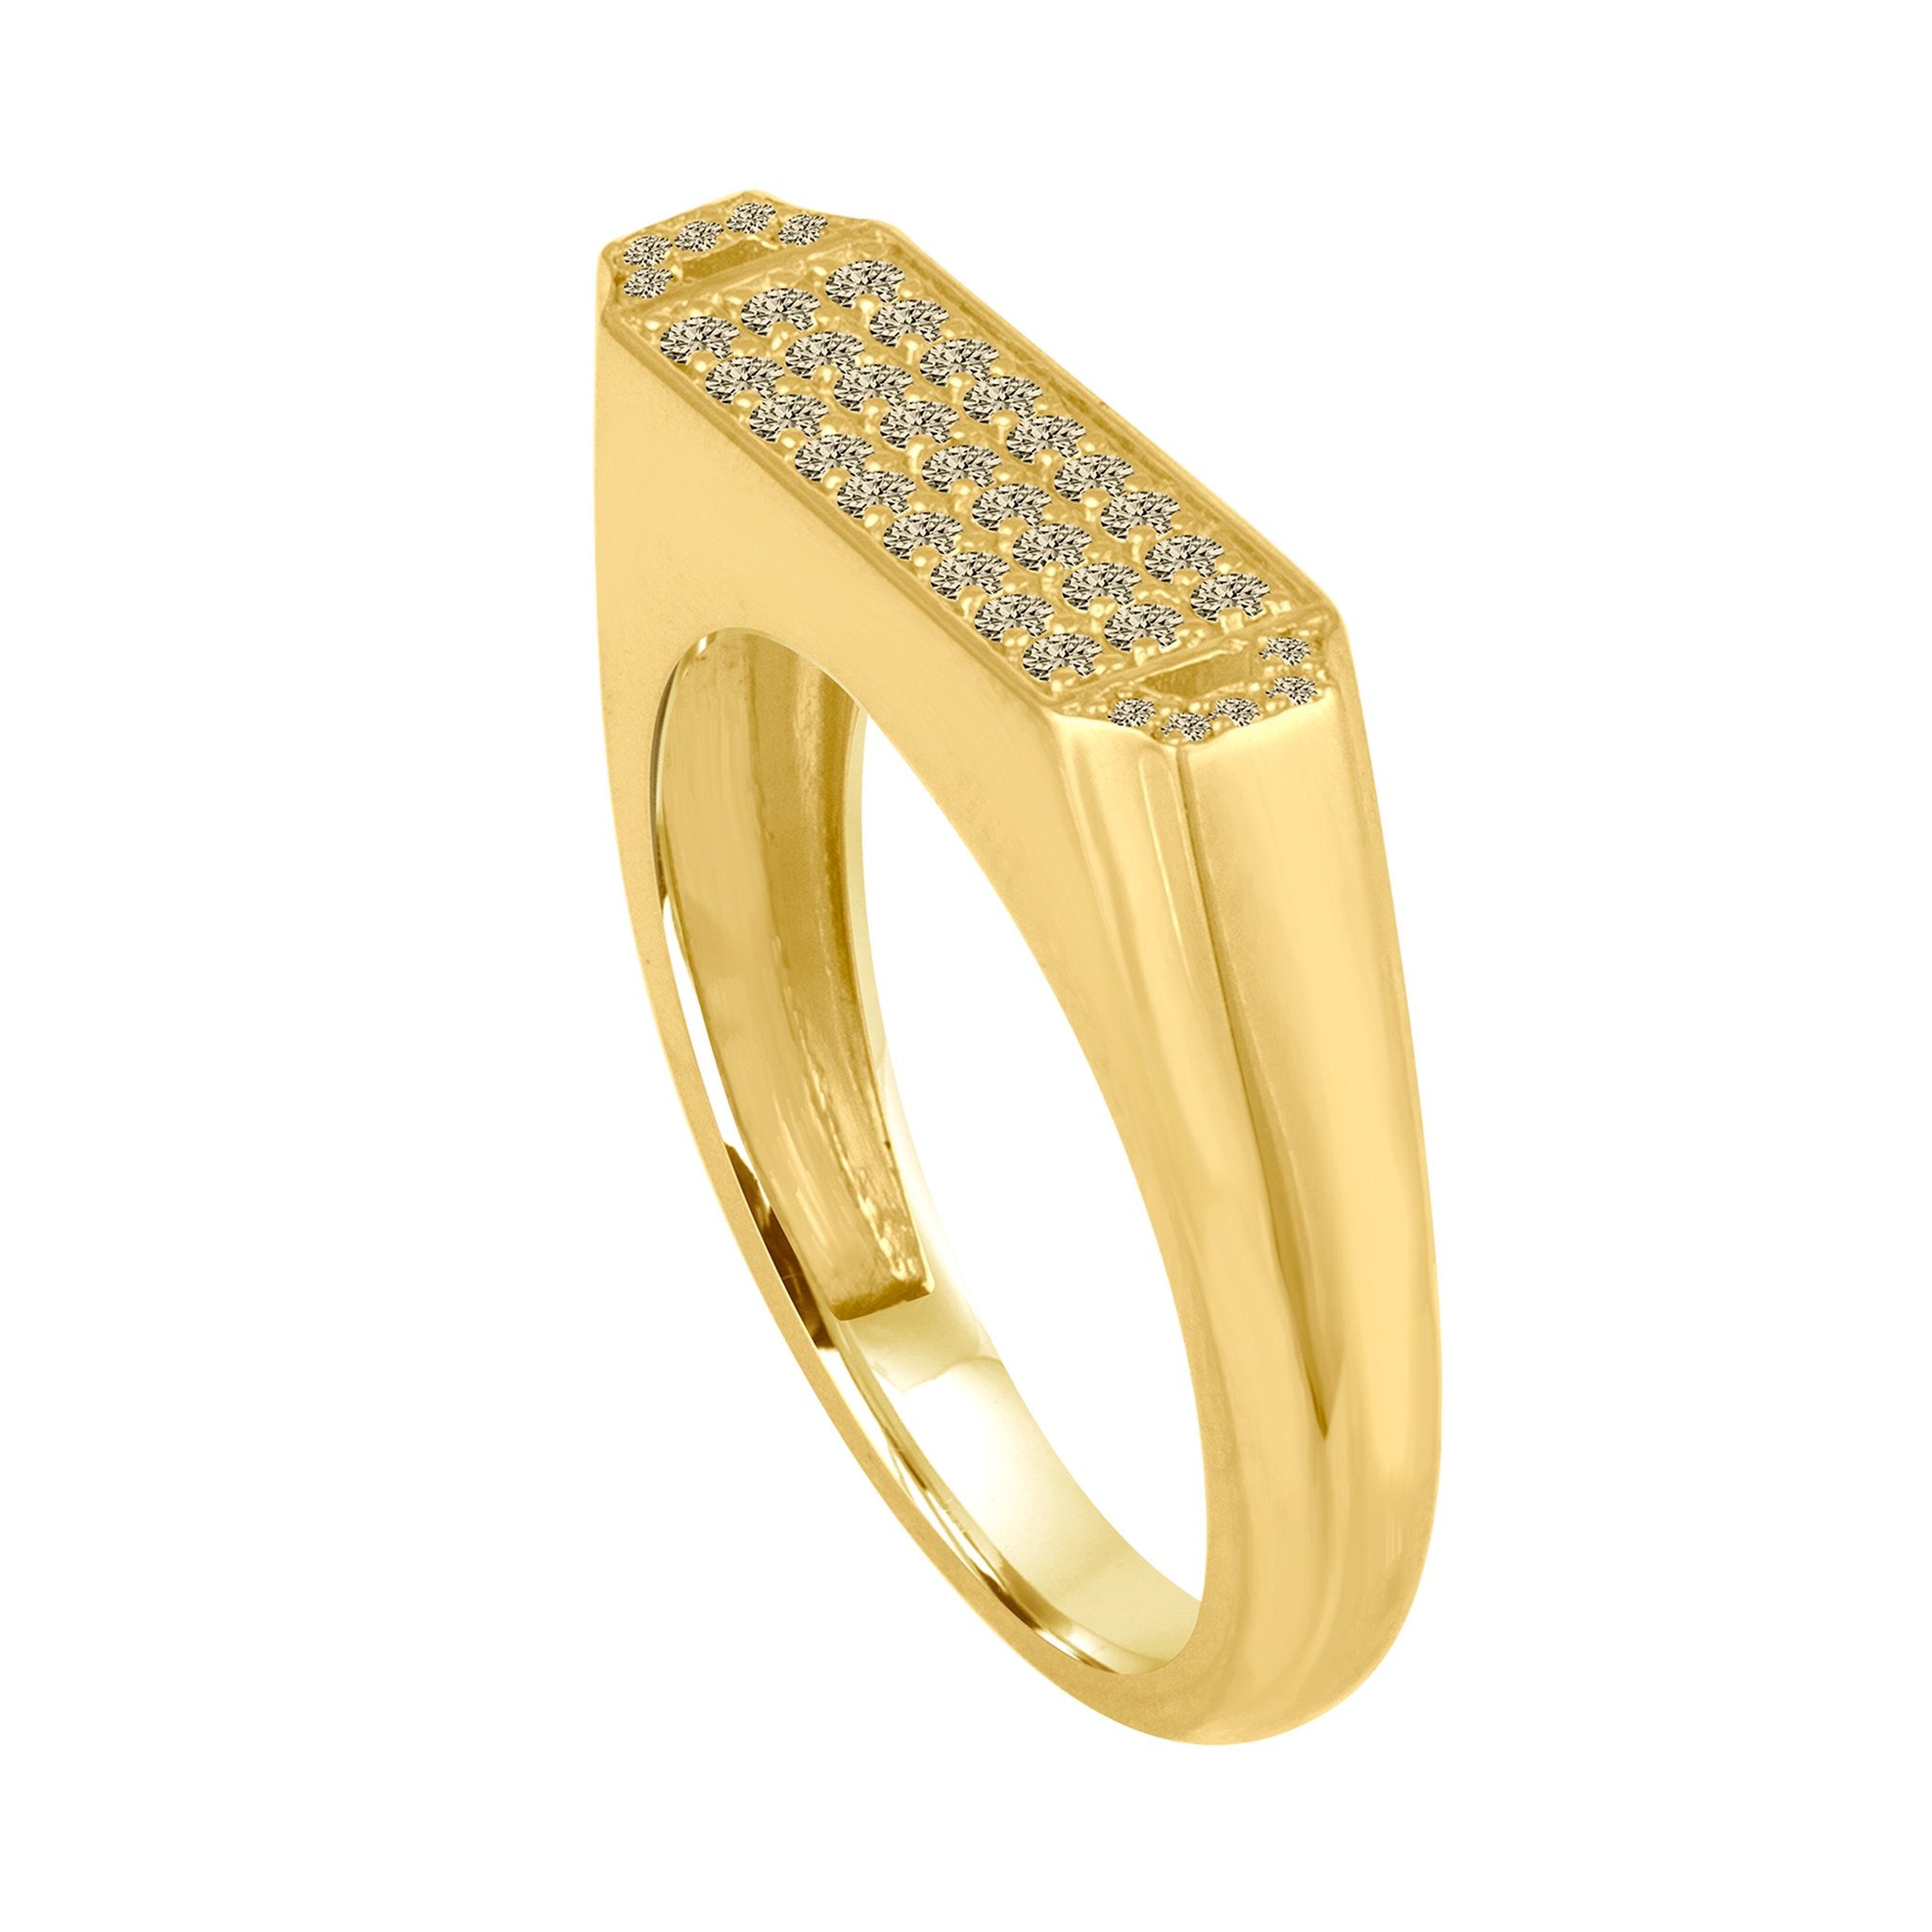 Edge Signet Ring: 18k Gold, Champagne Diamonds